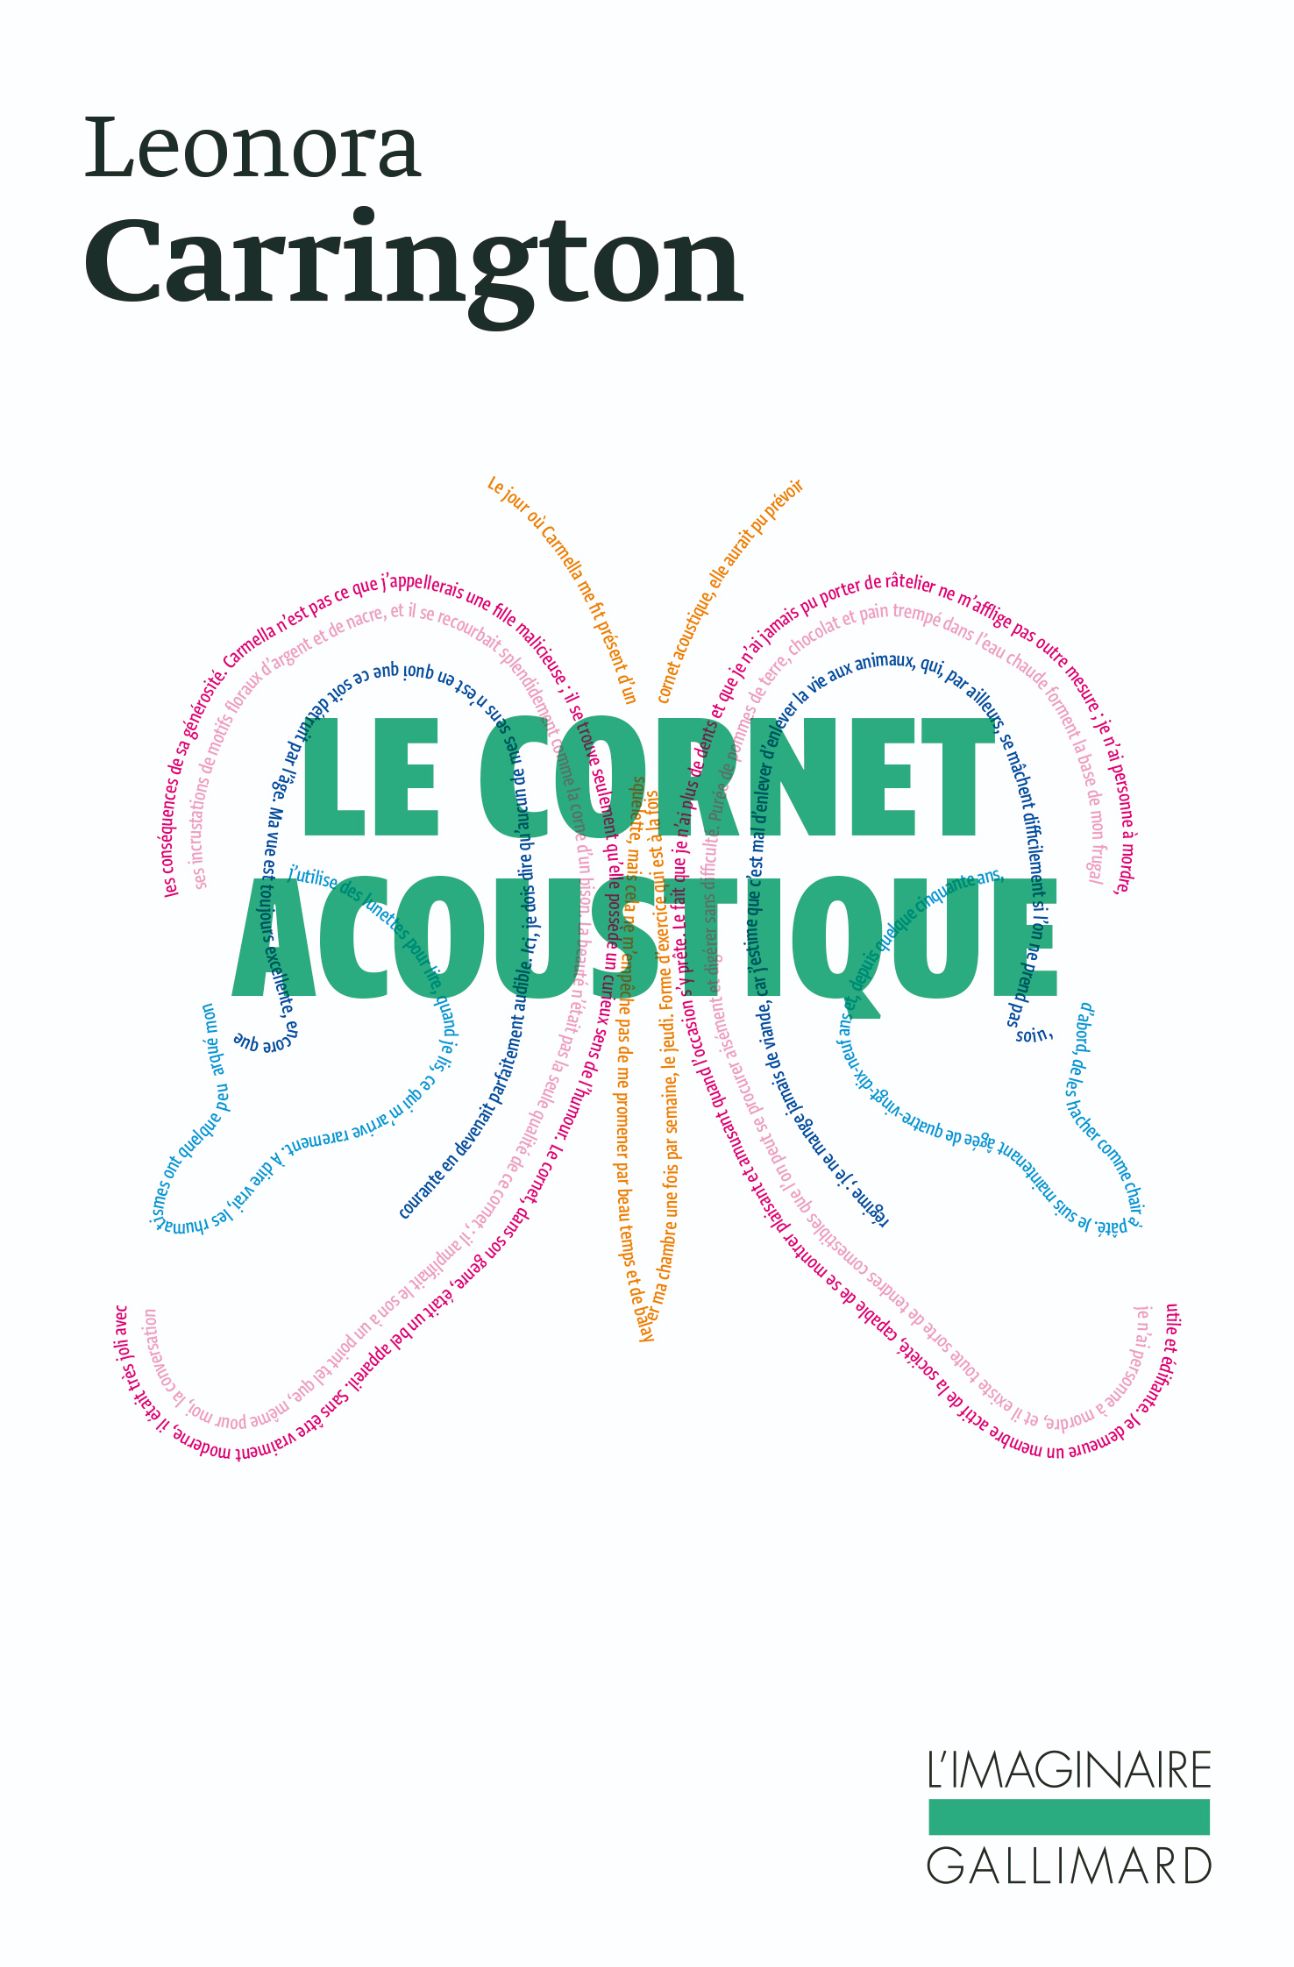 Leonara Carrington, Le cornet acoustique